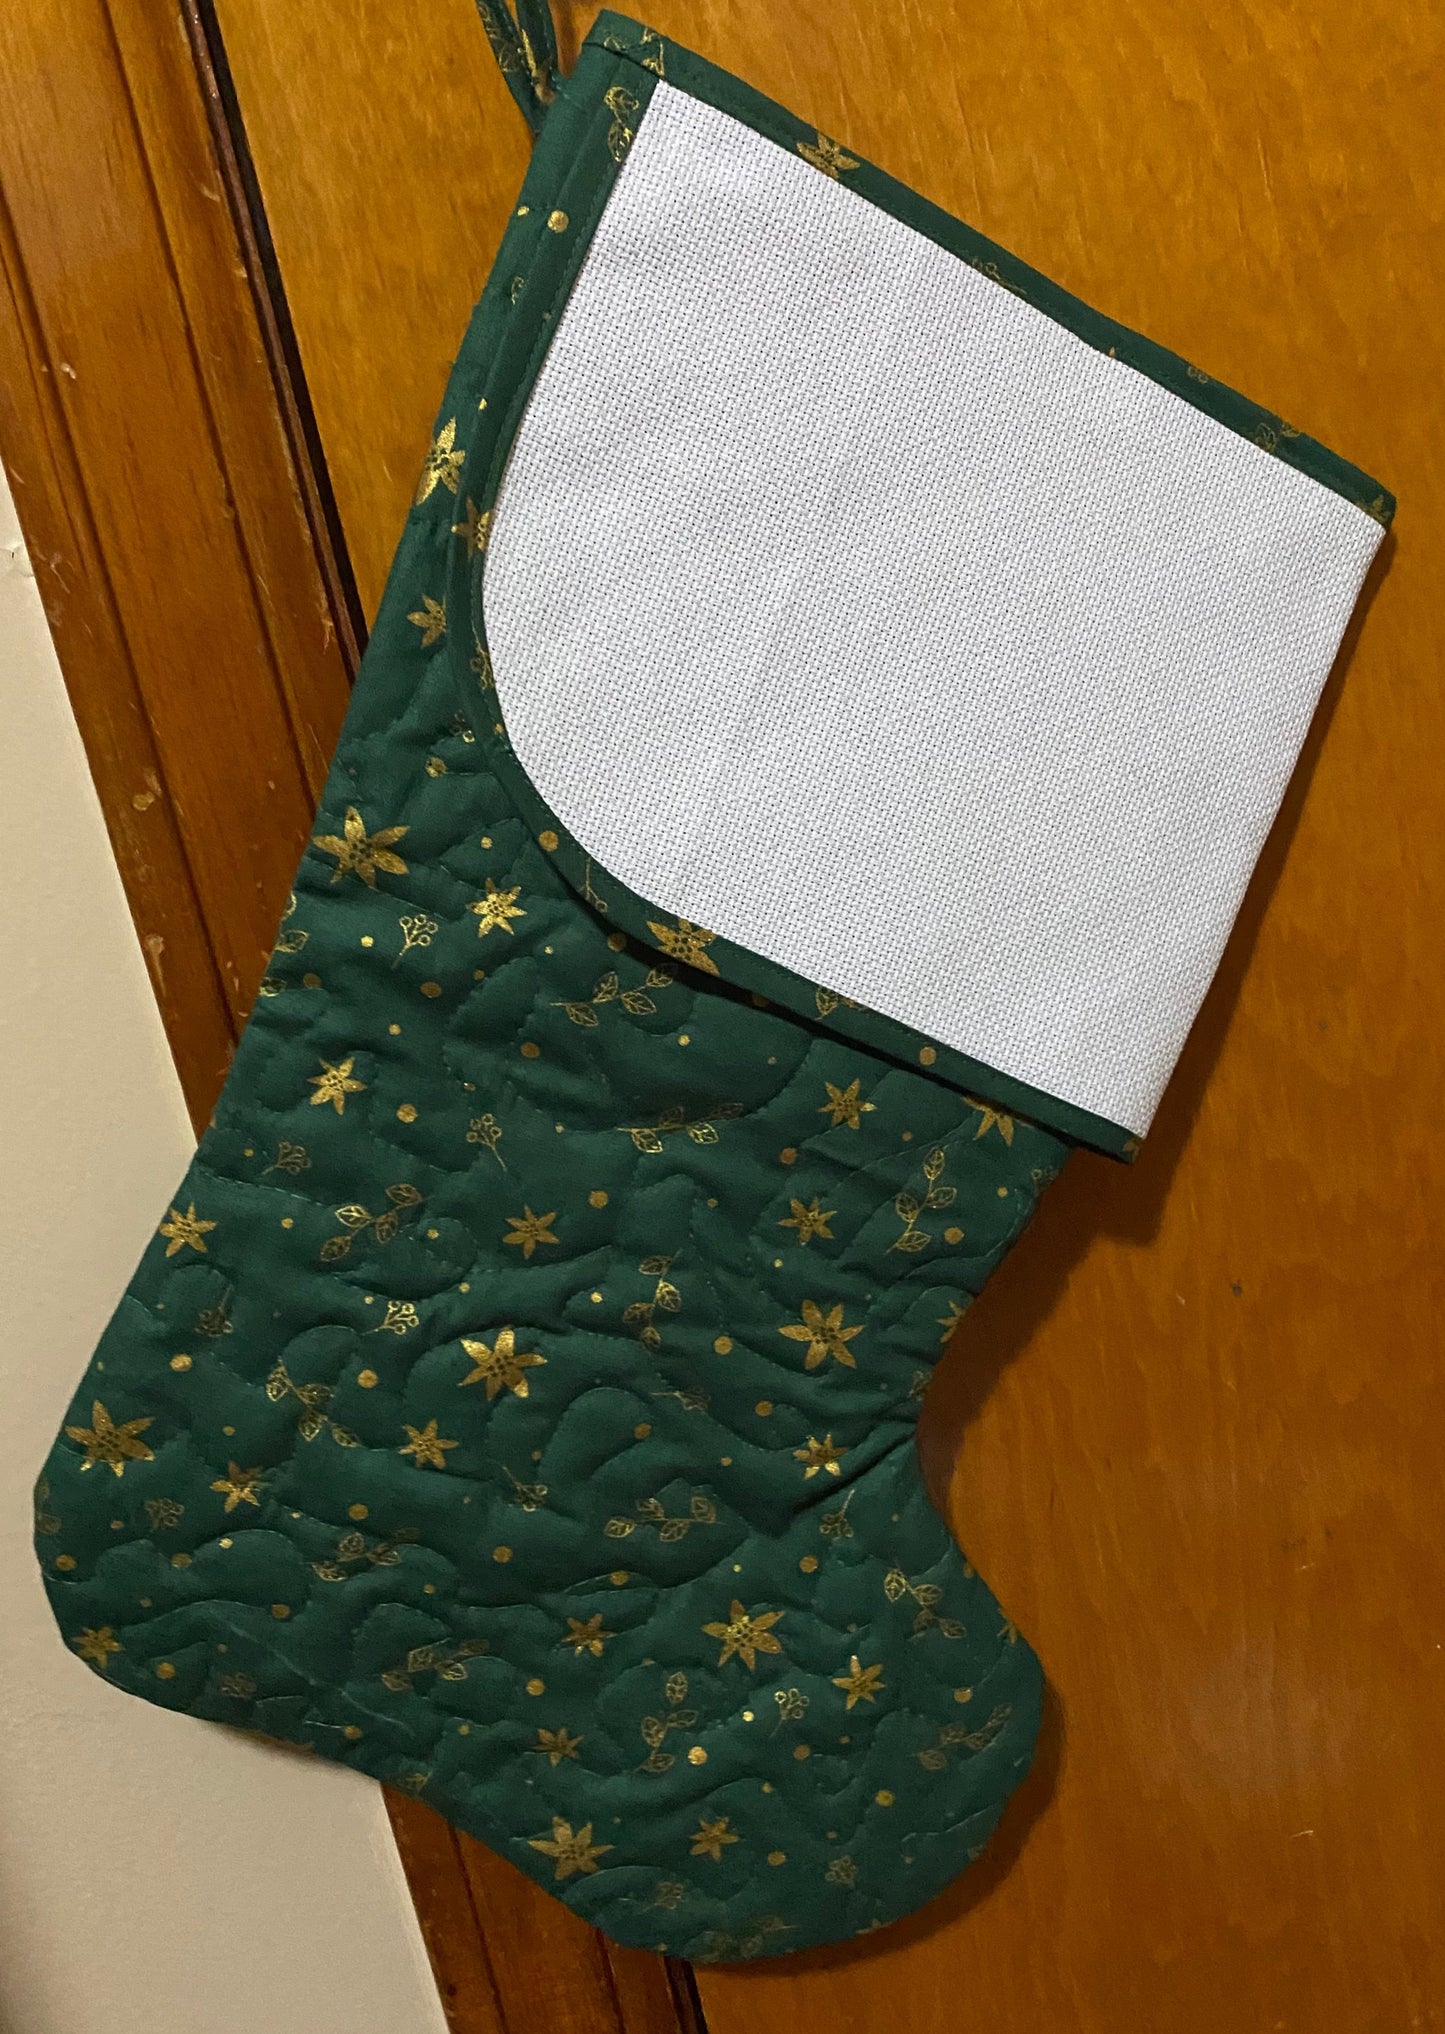 Christmas Stockings with Cross Stitch Cuff